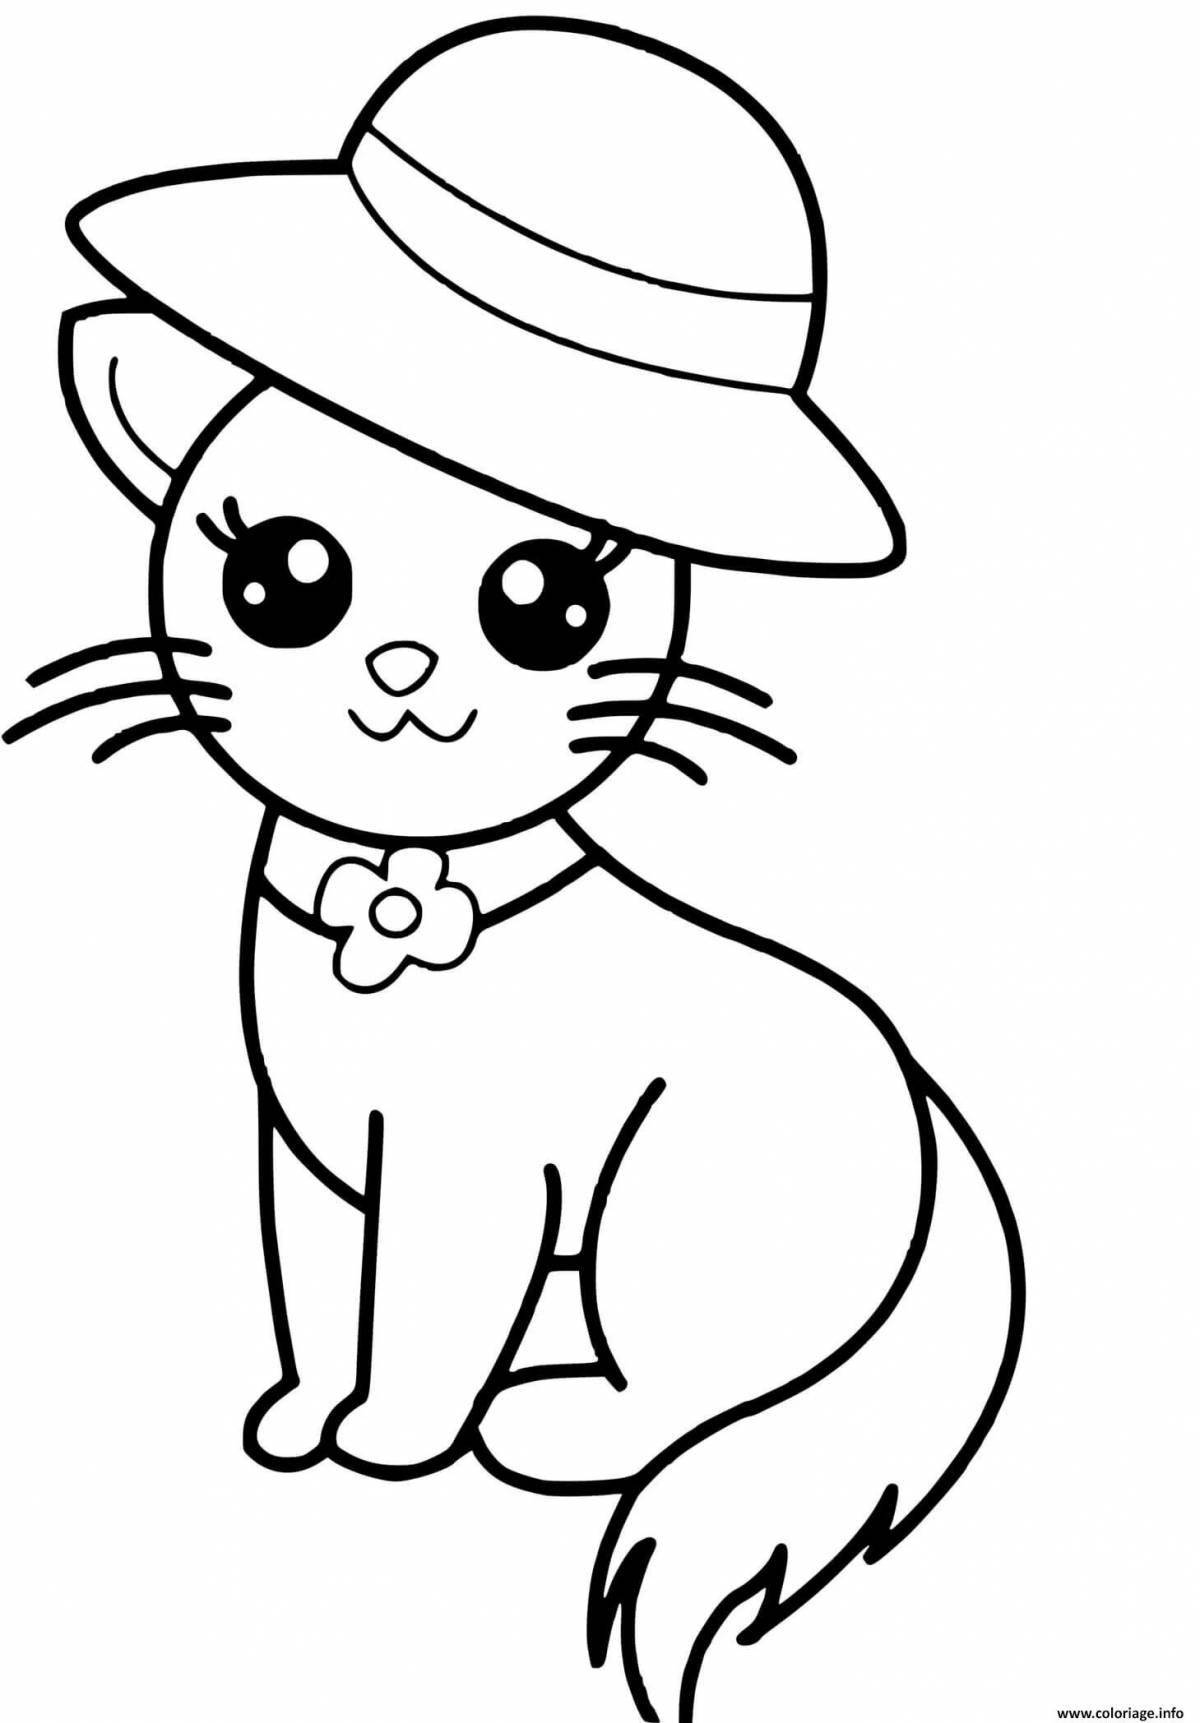 Snuggable coloring page cat для детей 2-3 лет